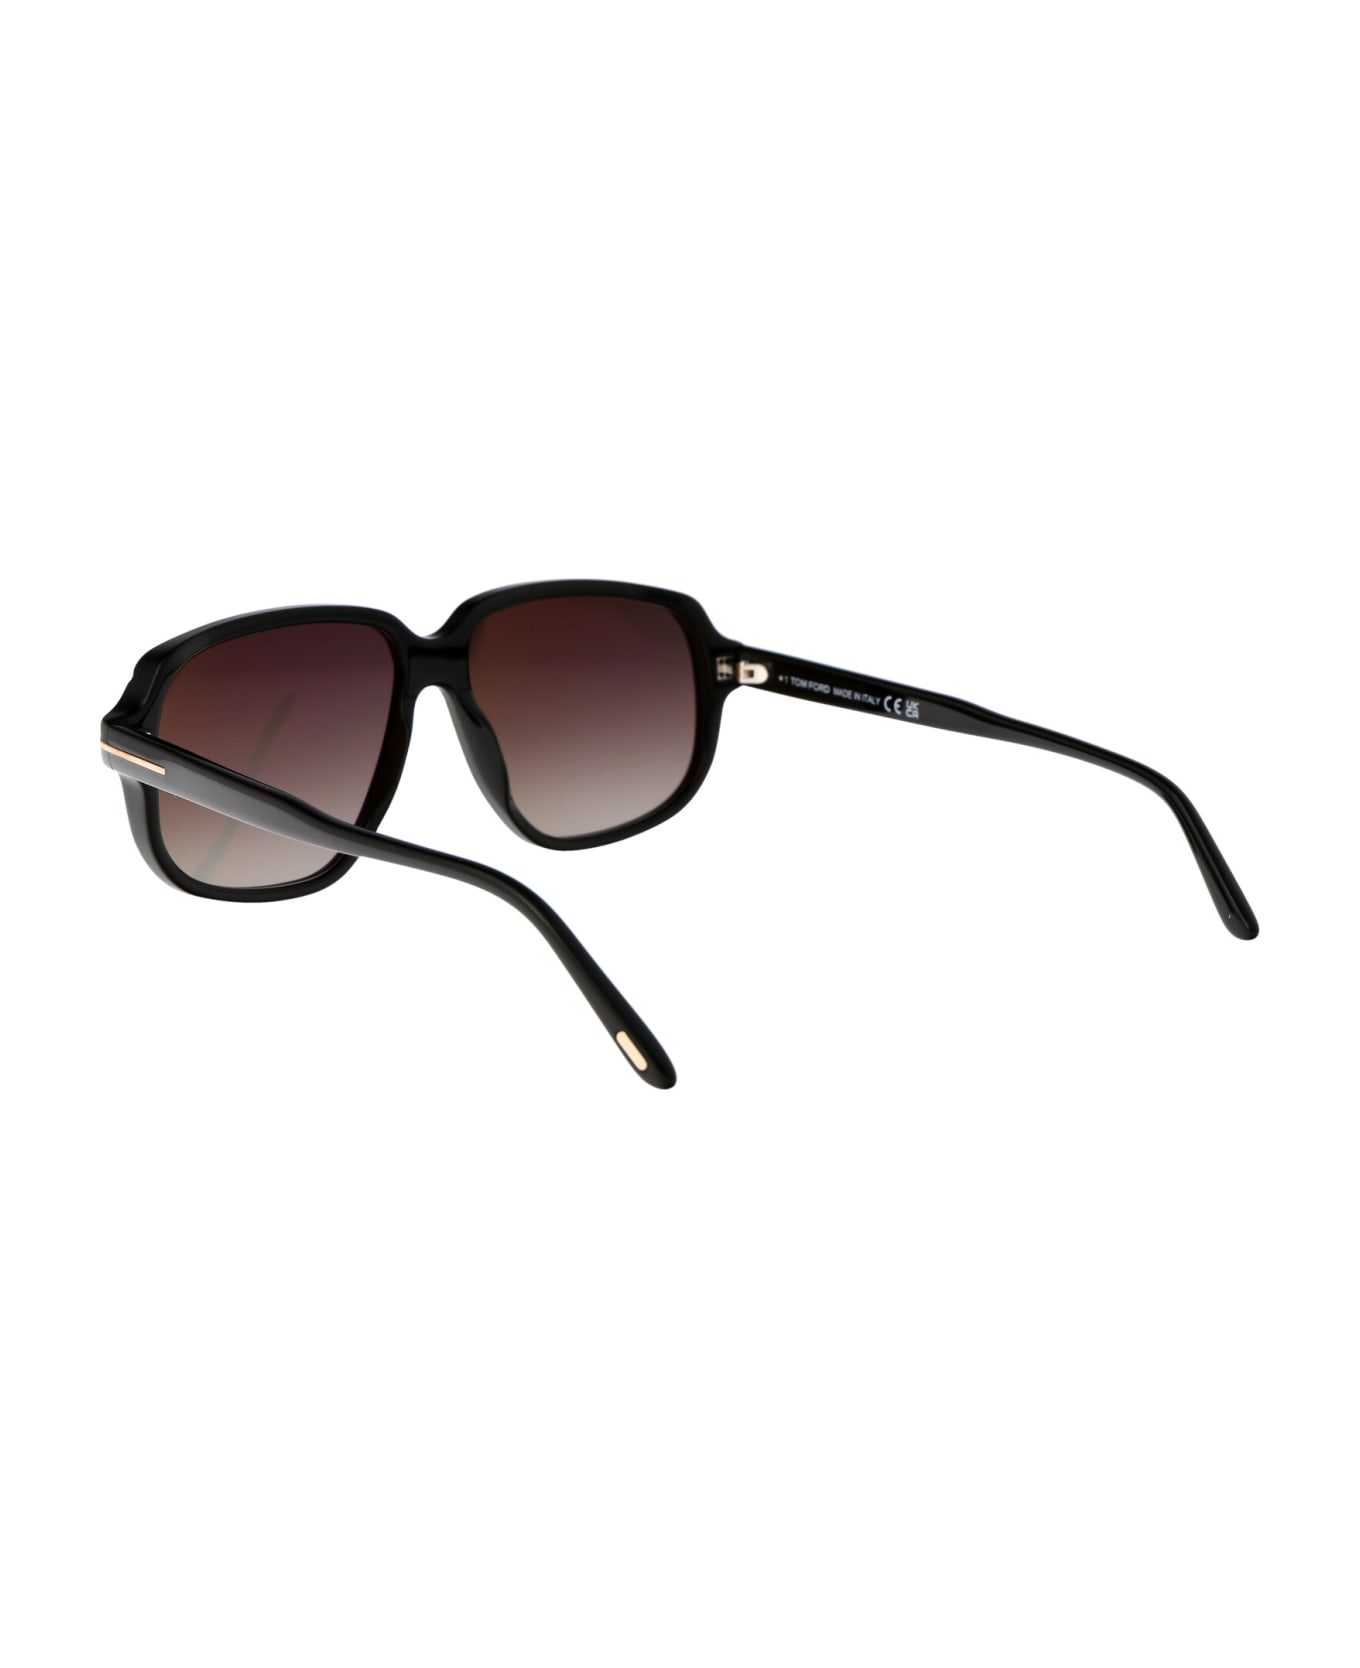 Tom Ford Eyewear Anton Sunglasses - 01B Nero Lucido / Fumo Grad